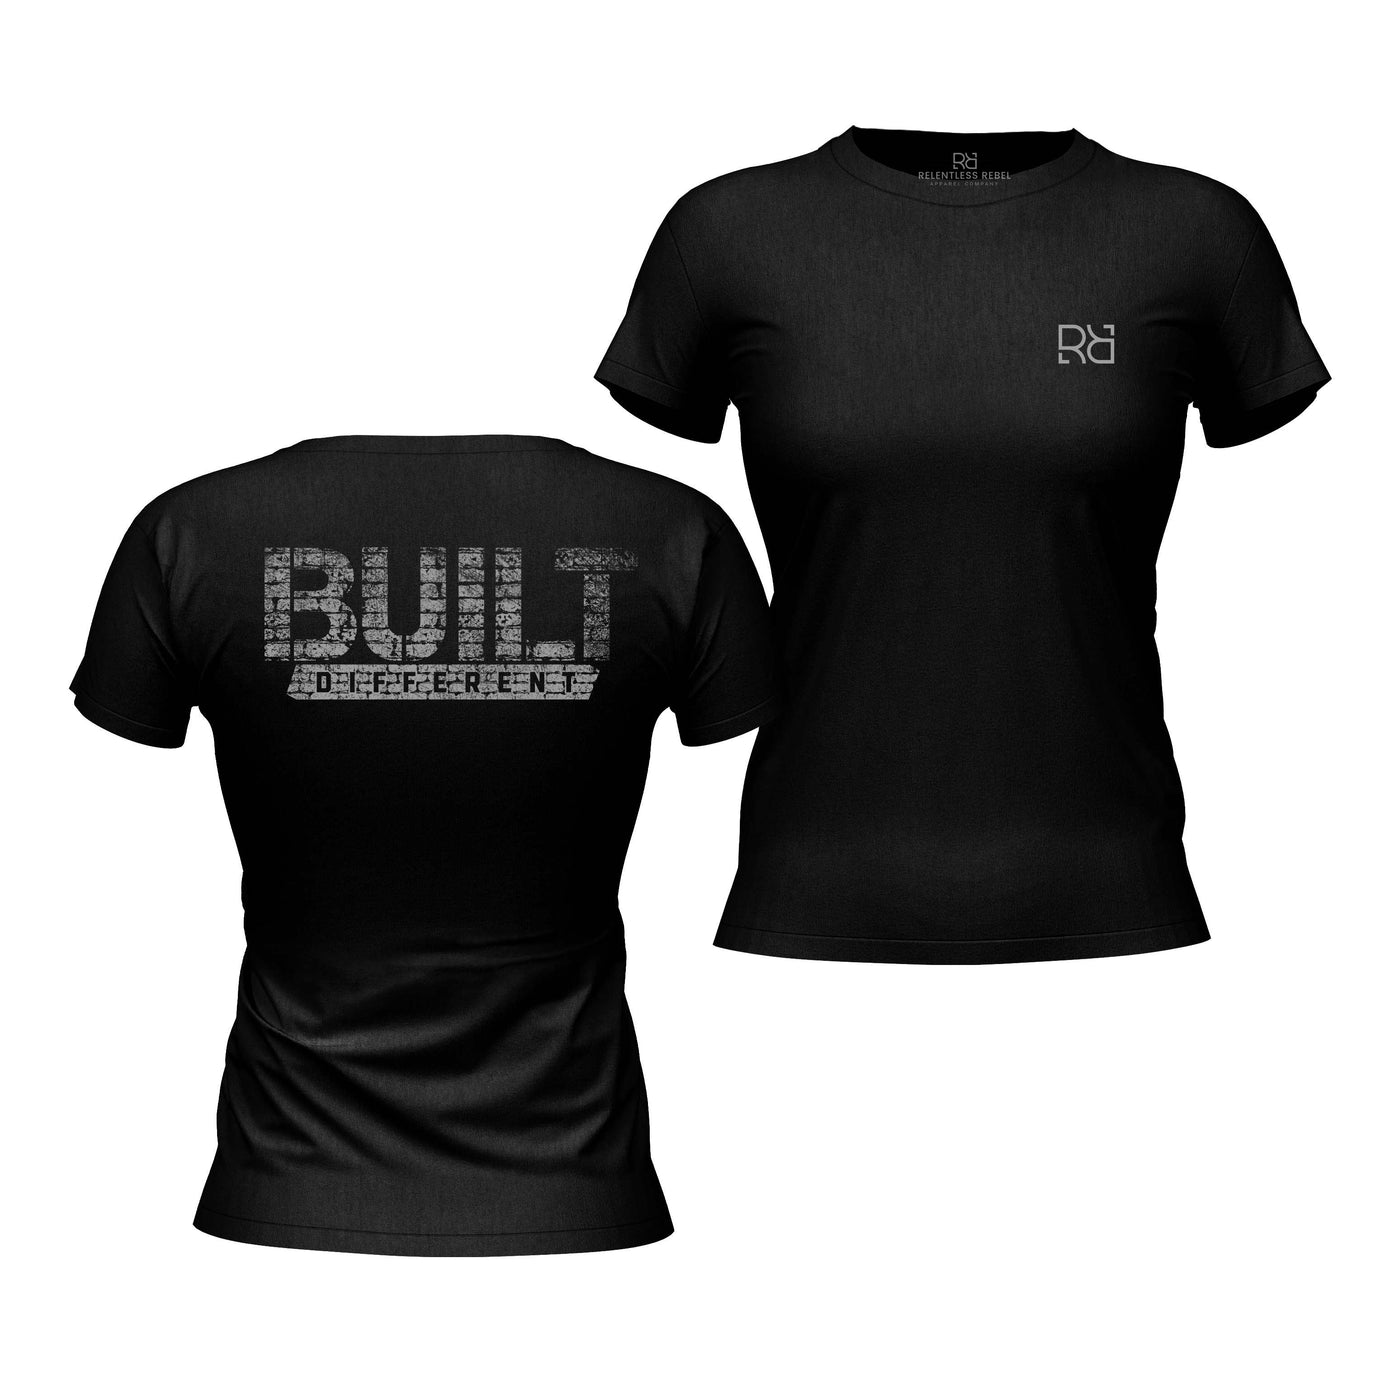 Women's Built Different back design t-shirt